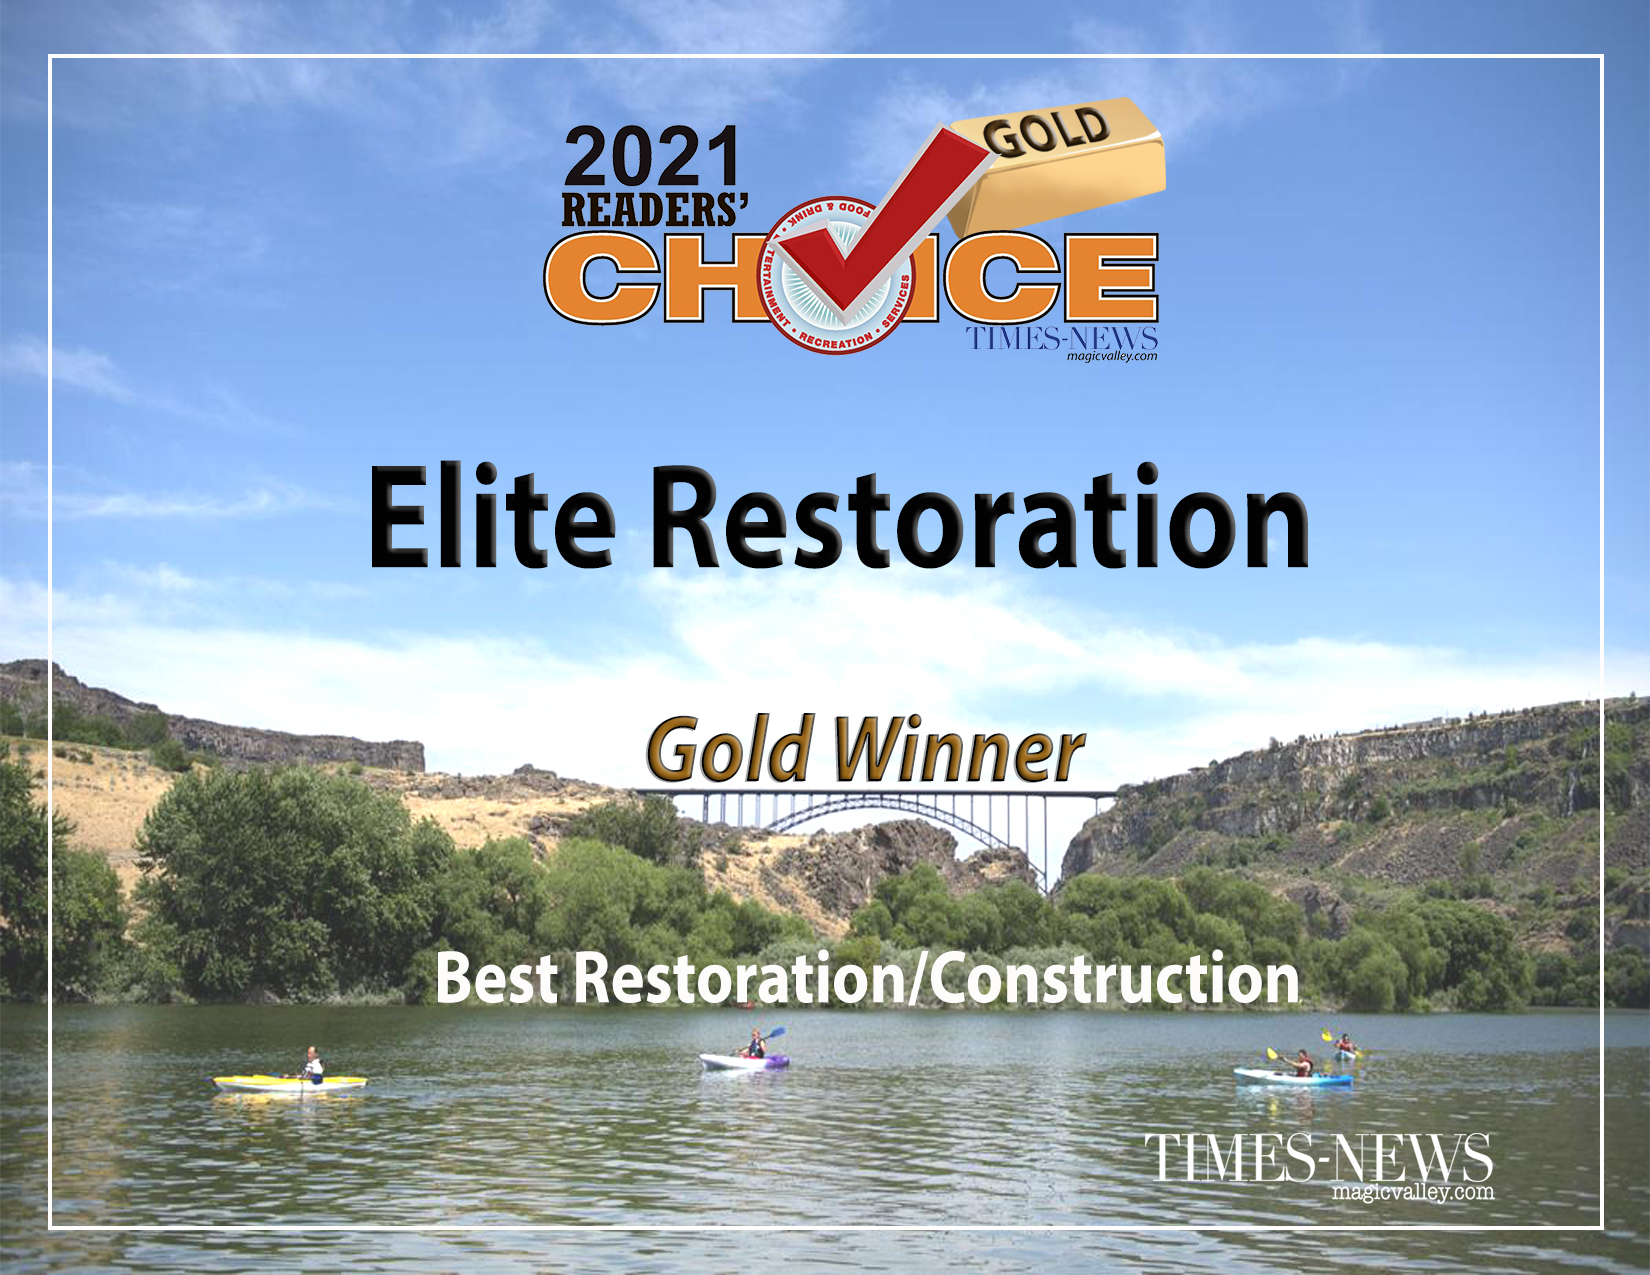 Elite Restoration Gold Winner award from 2021 readers choice.